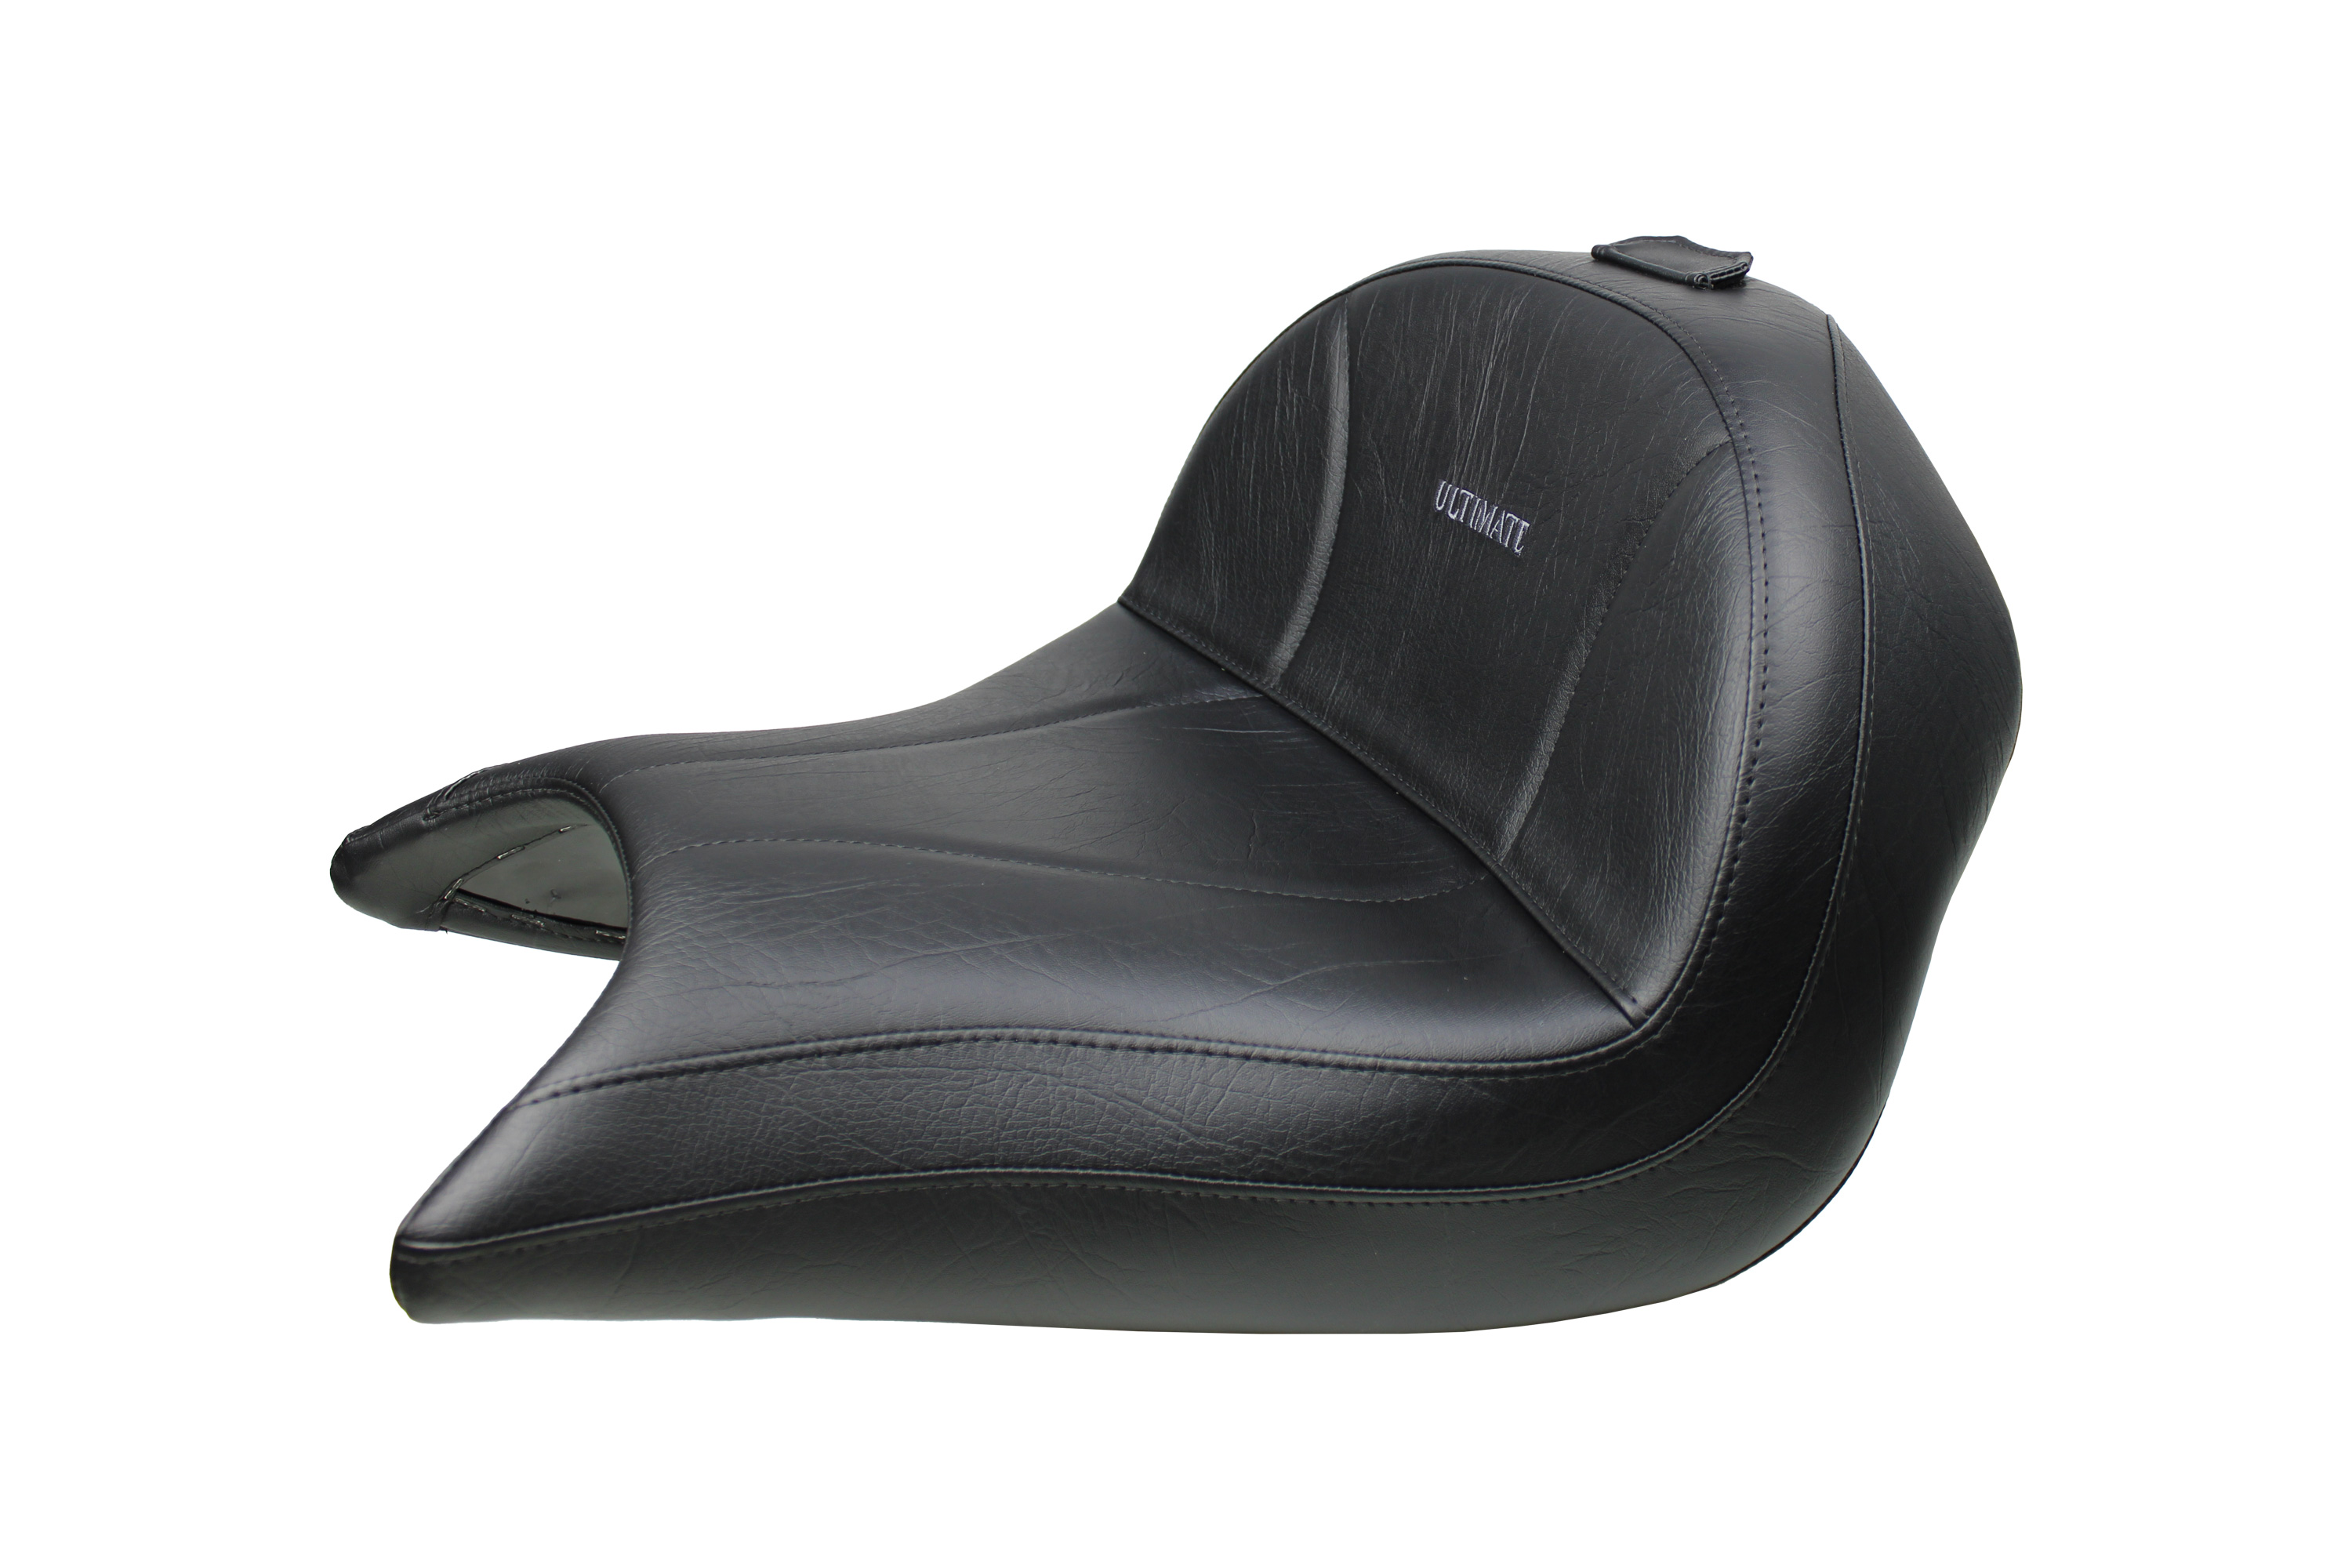 VTX 1800 N Neo Lowrider Seat - Plain or Studded